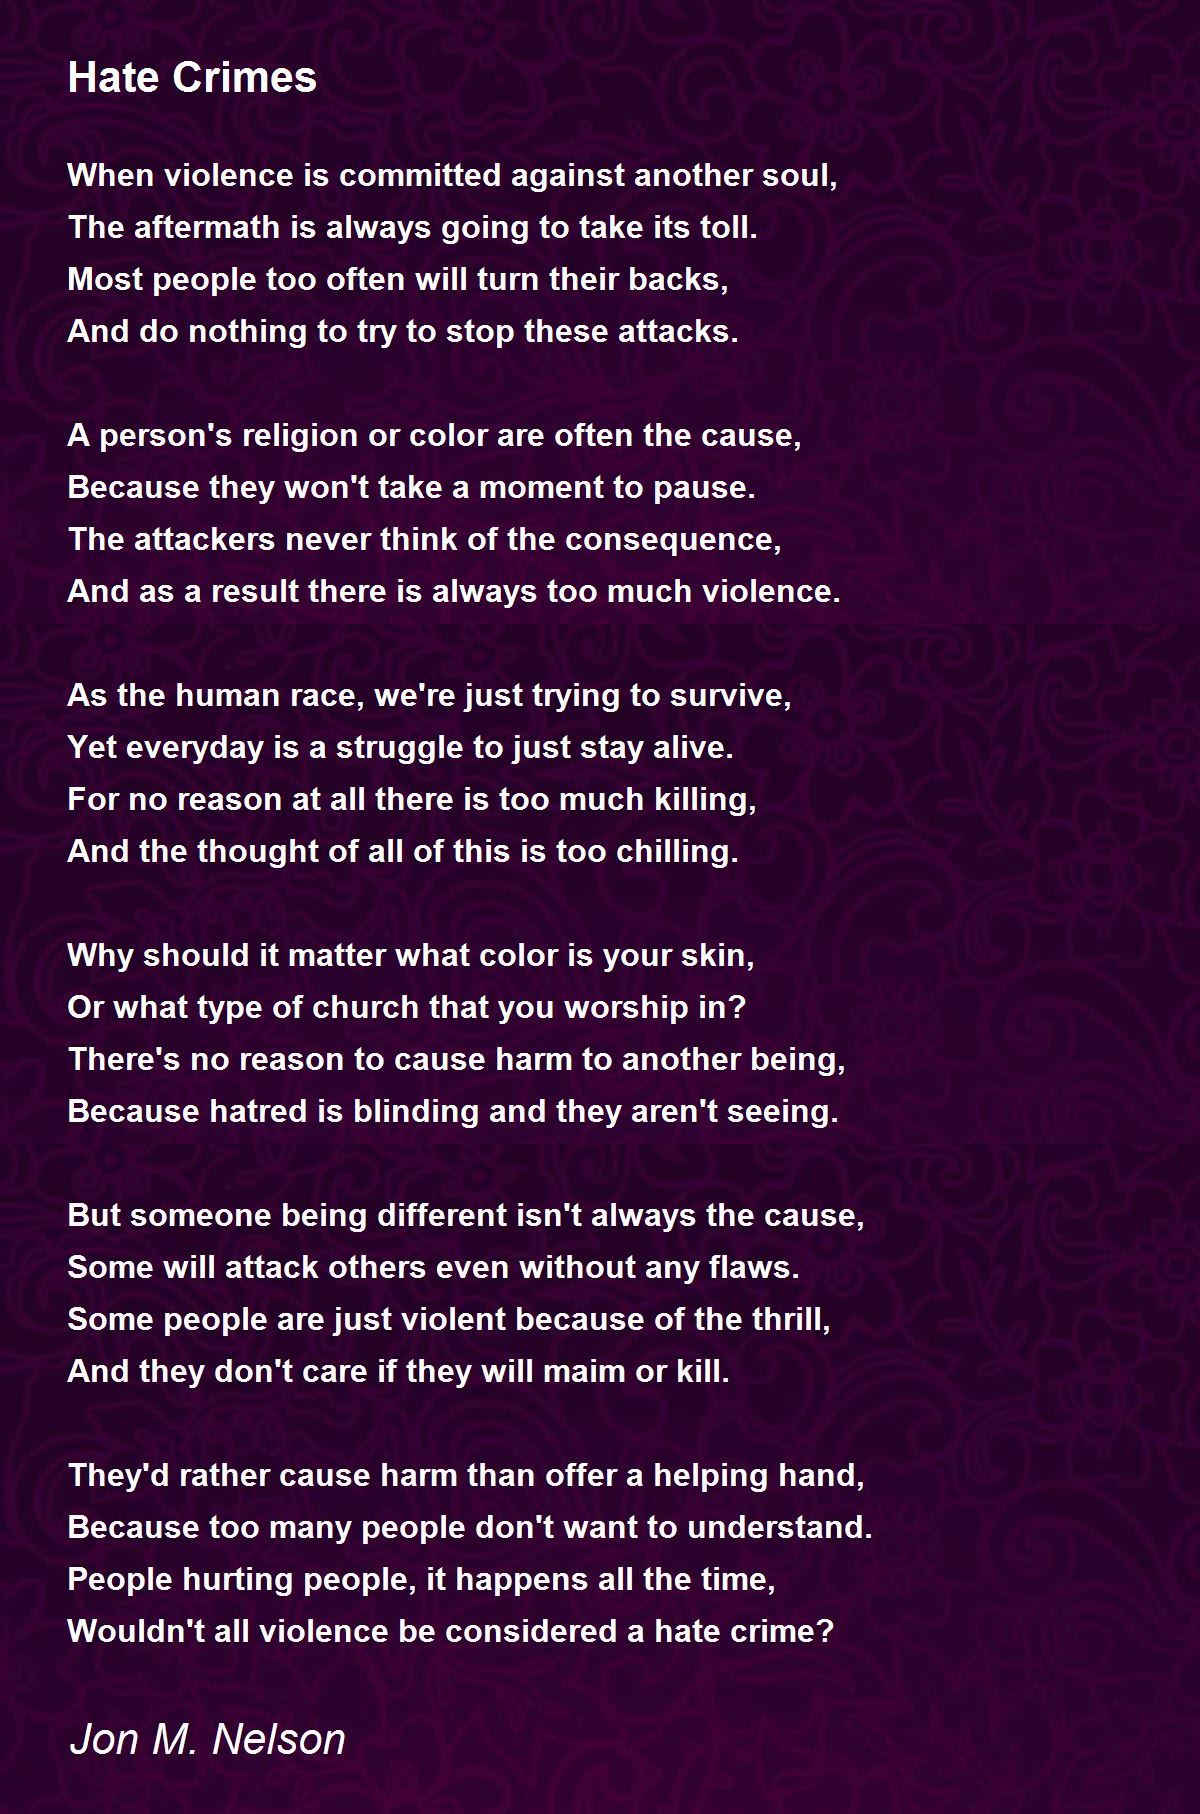 Hate Crimes Poem by Jon M. Nelson - Poem Hunter